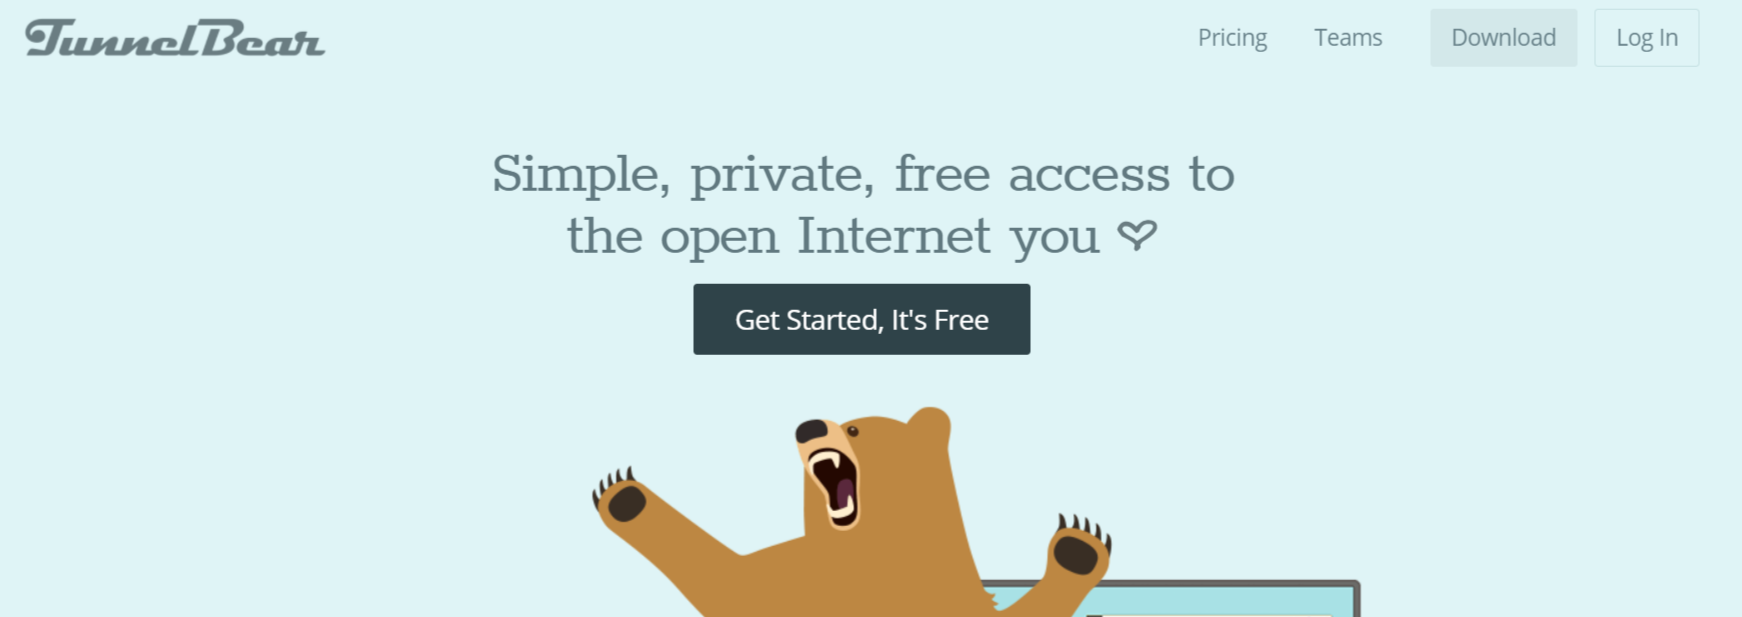 TunnelBear - Best VPN For Estonia